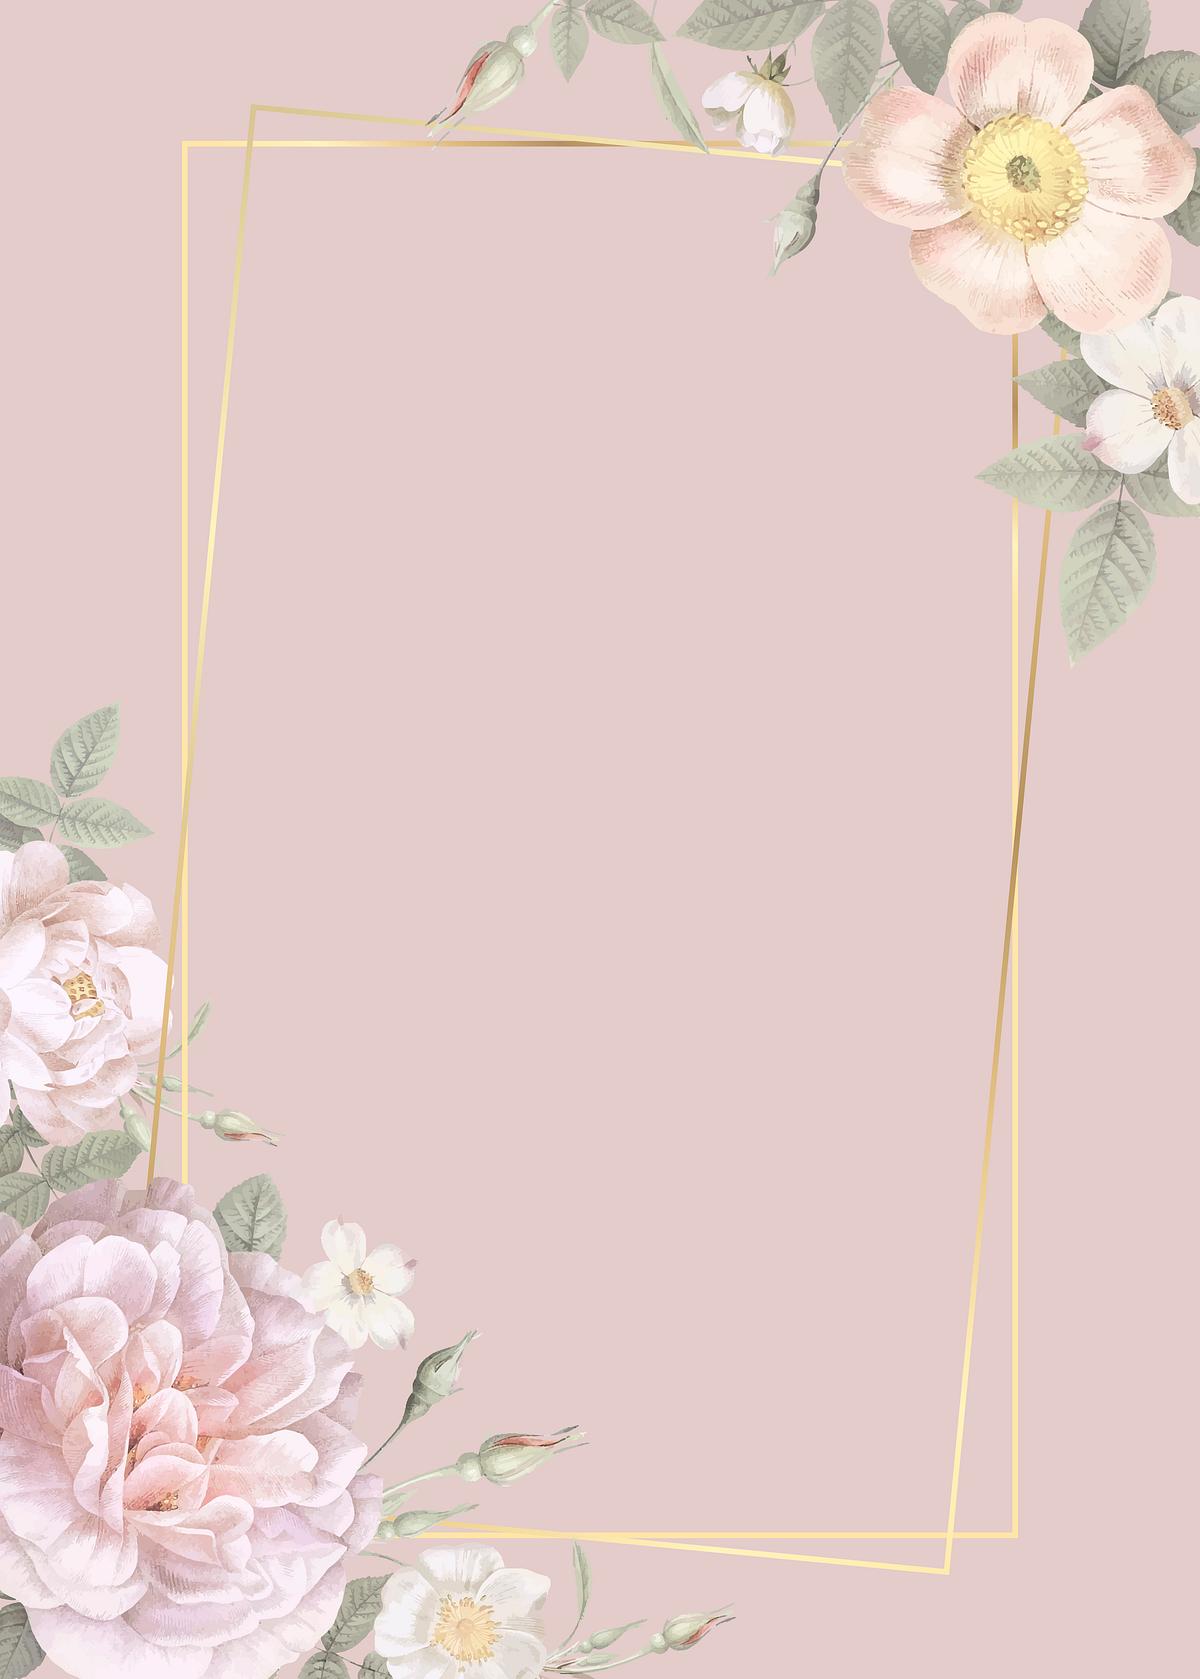 Download Feminine floral rectangle frame | Royalty free stock ...